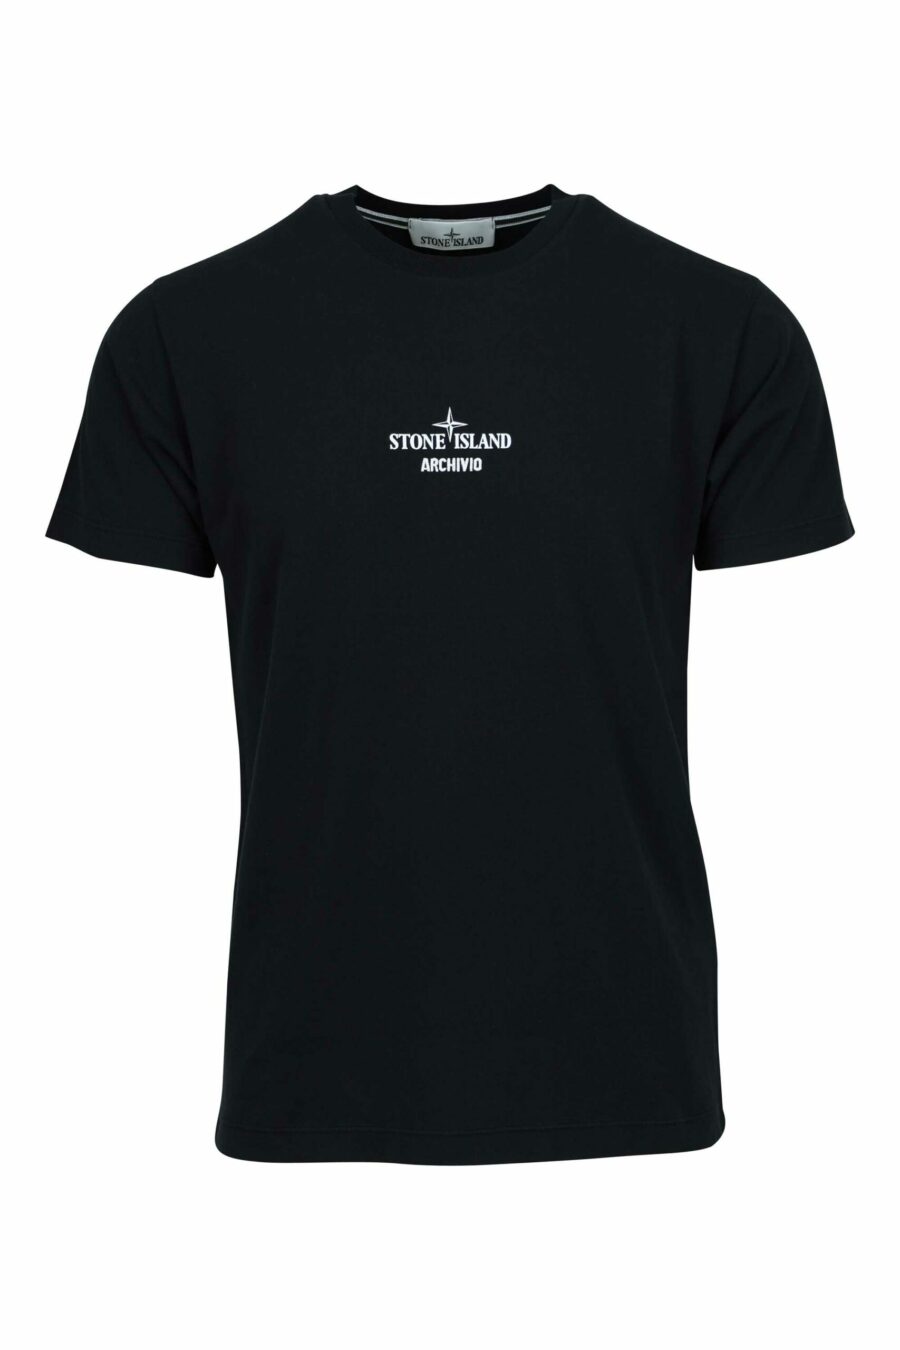 Camiseta negra con minilogo "archivio" centrado - 8052572924798 scaled